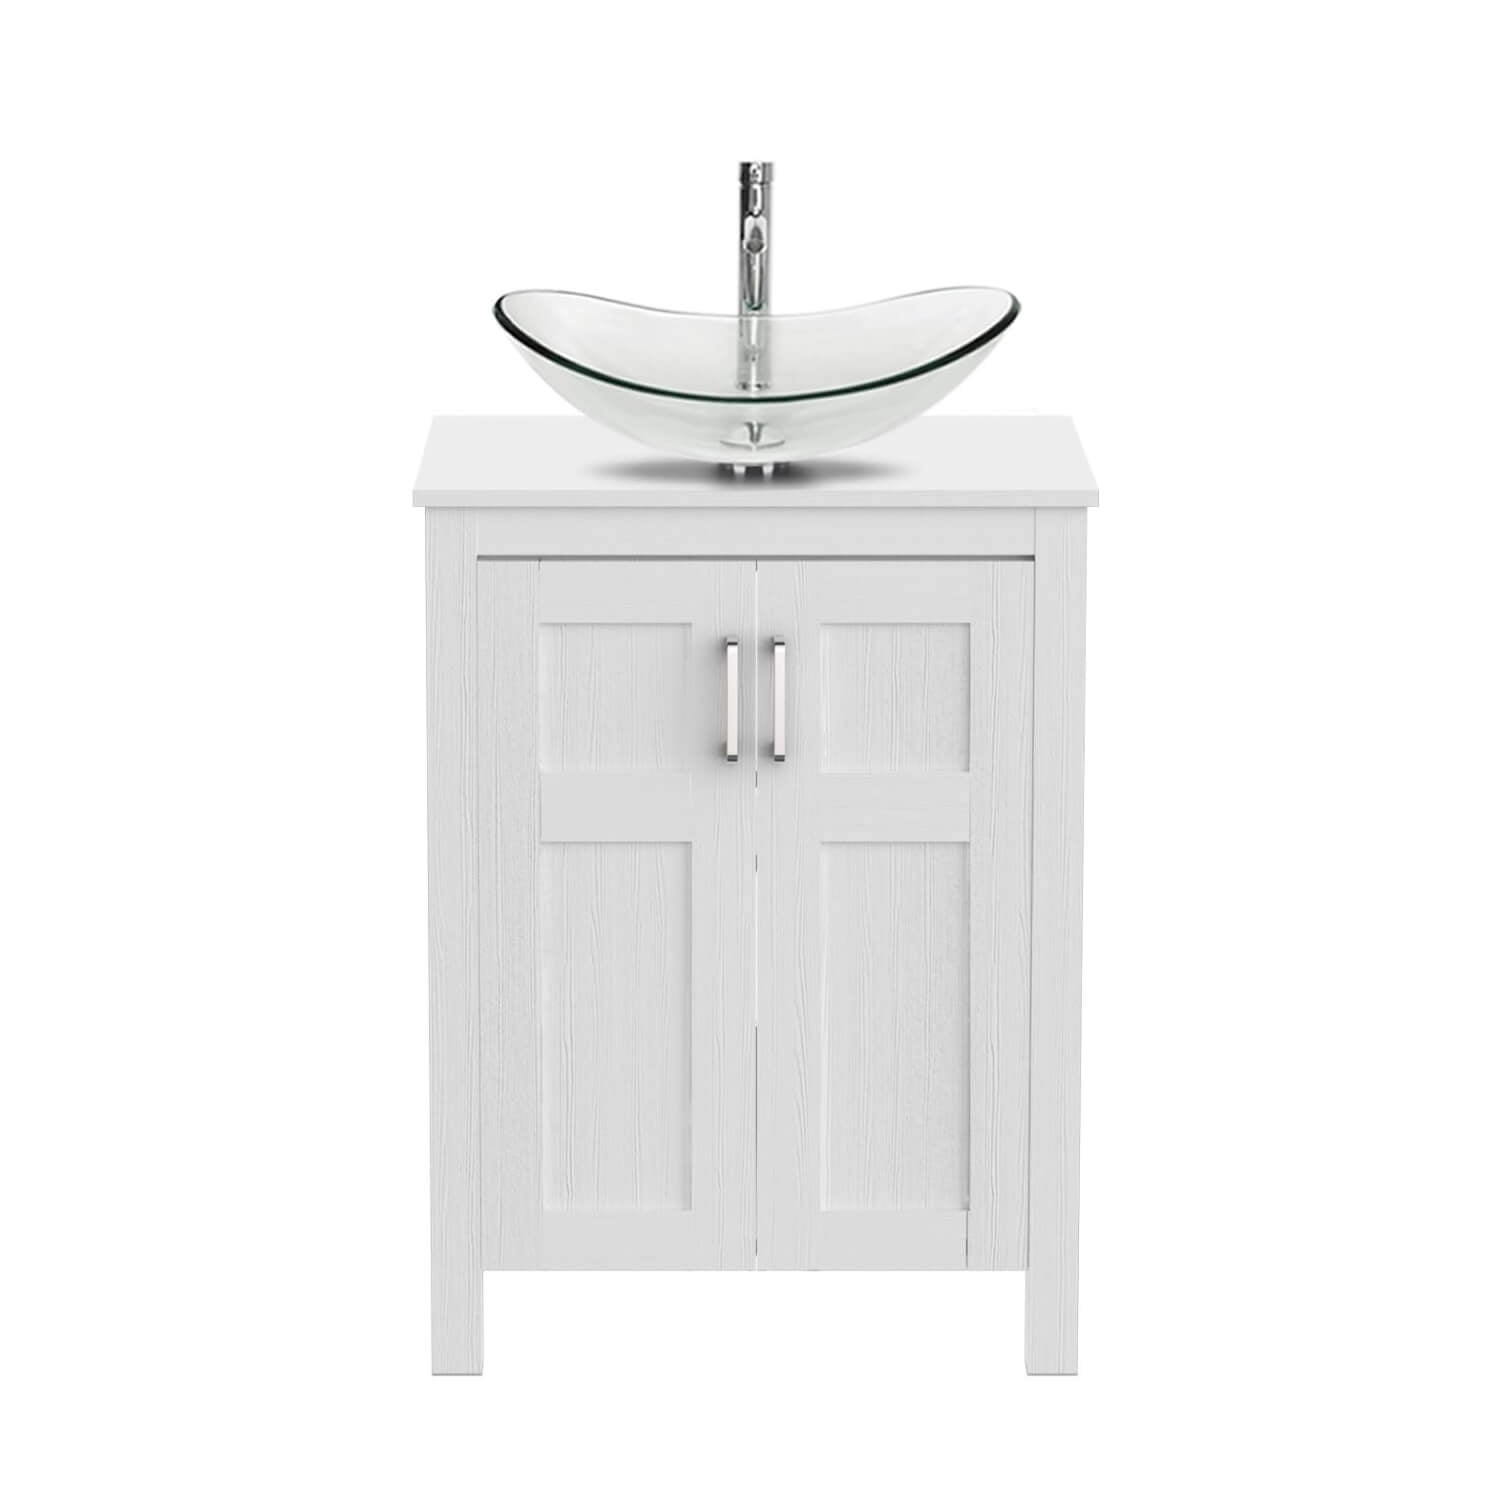 Elecwish White Bathroom Vanity and Clear Boat Sink Set HW1120-WH